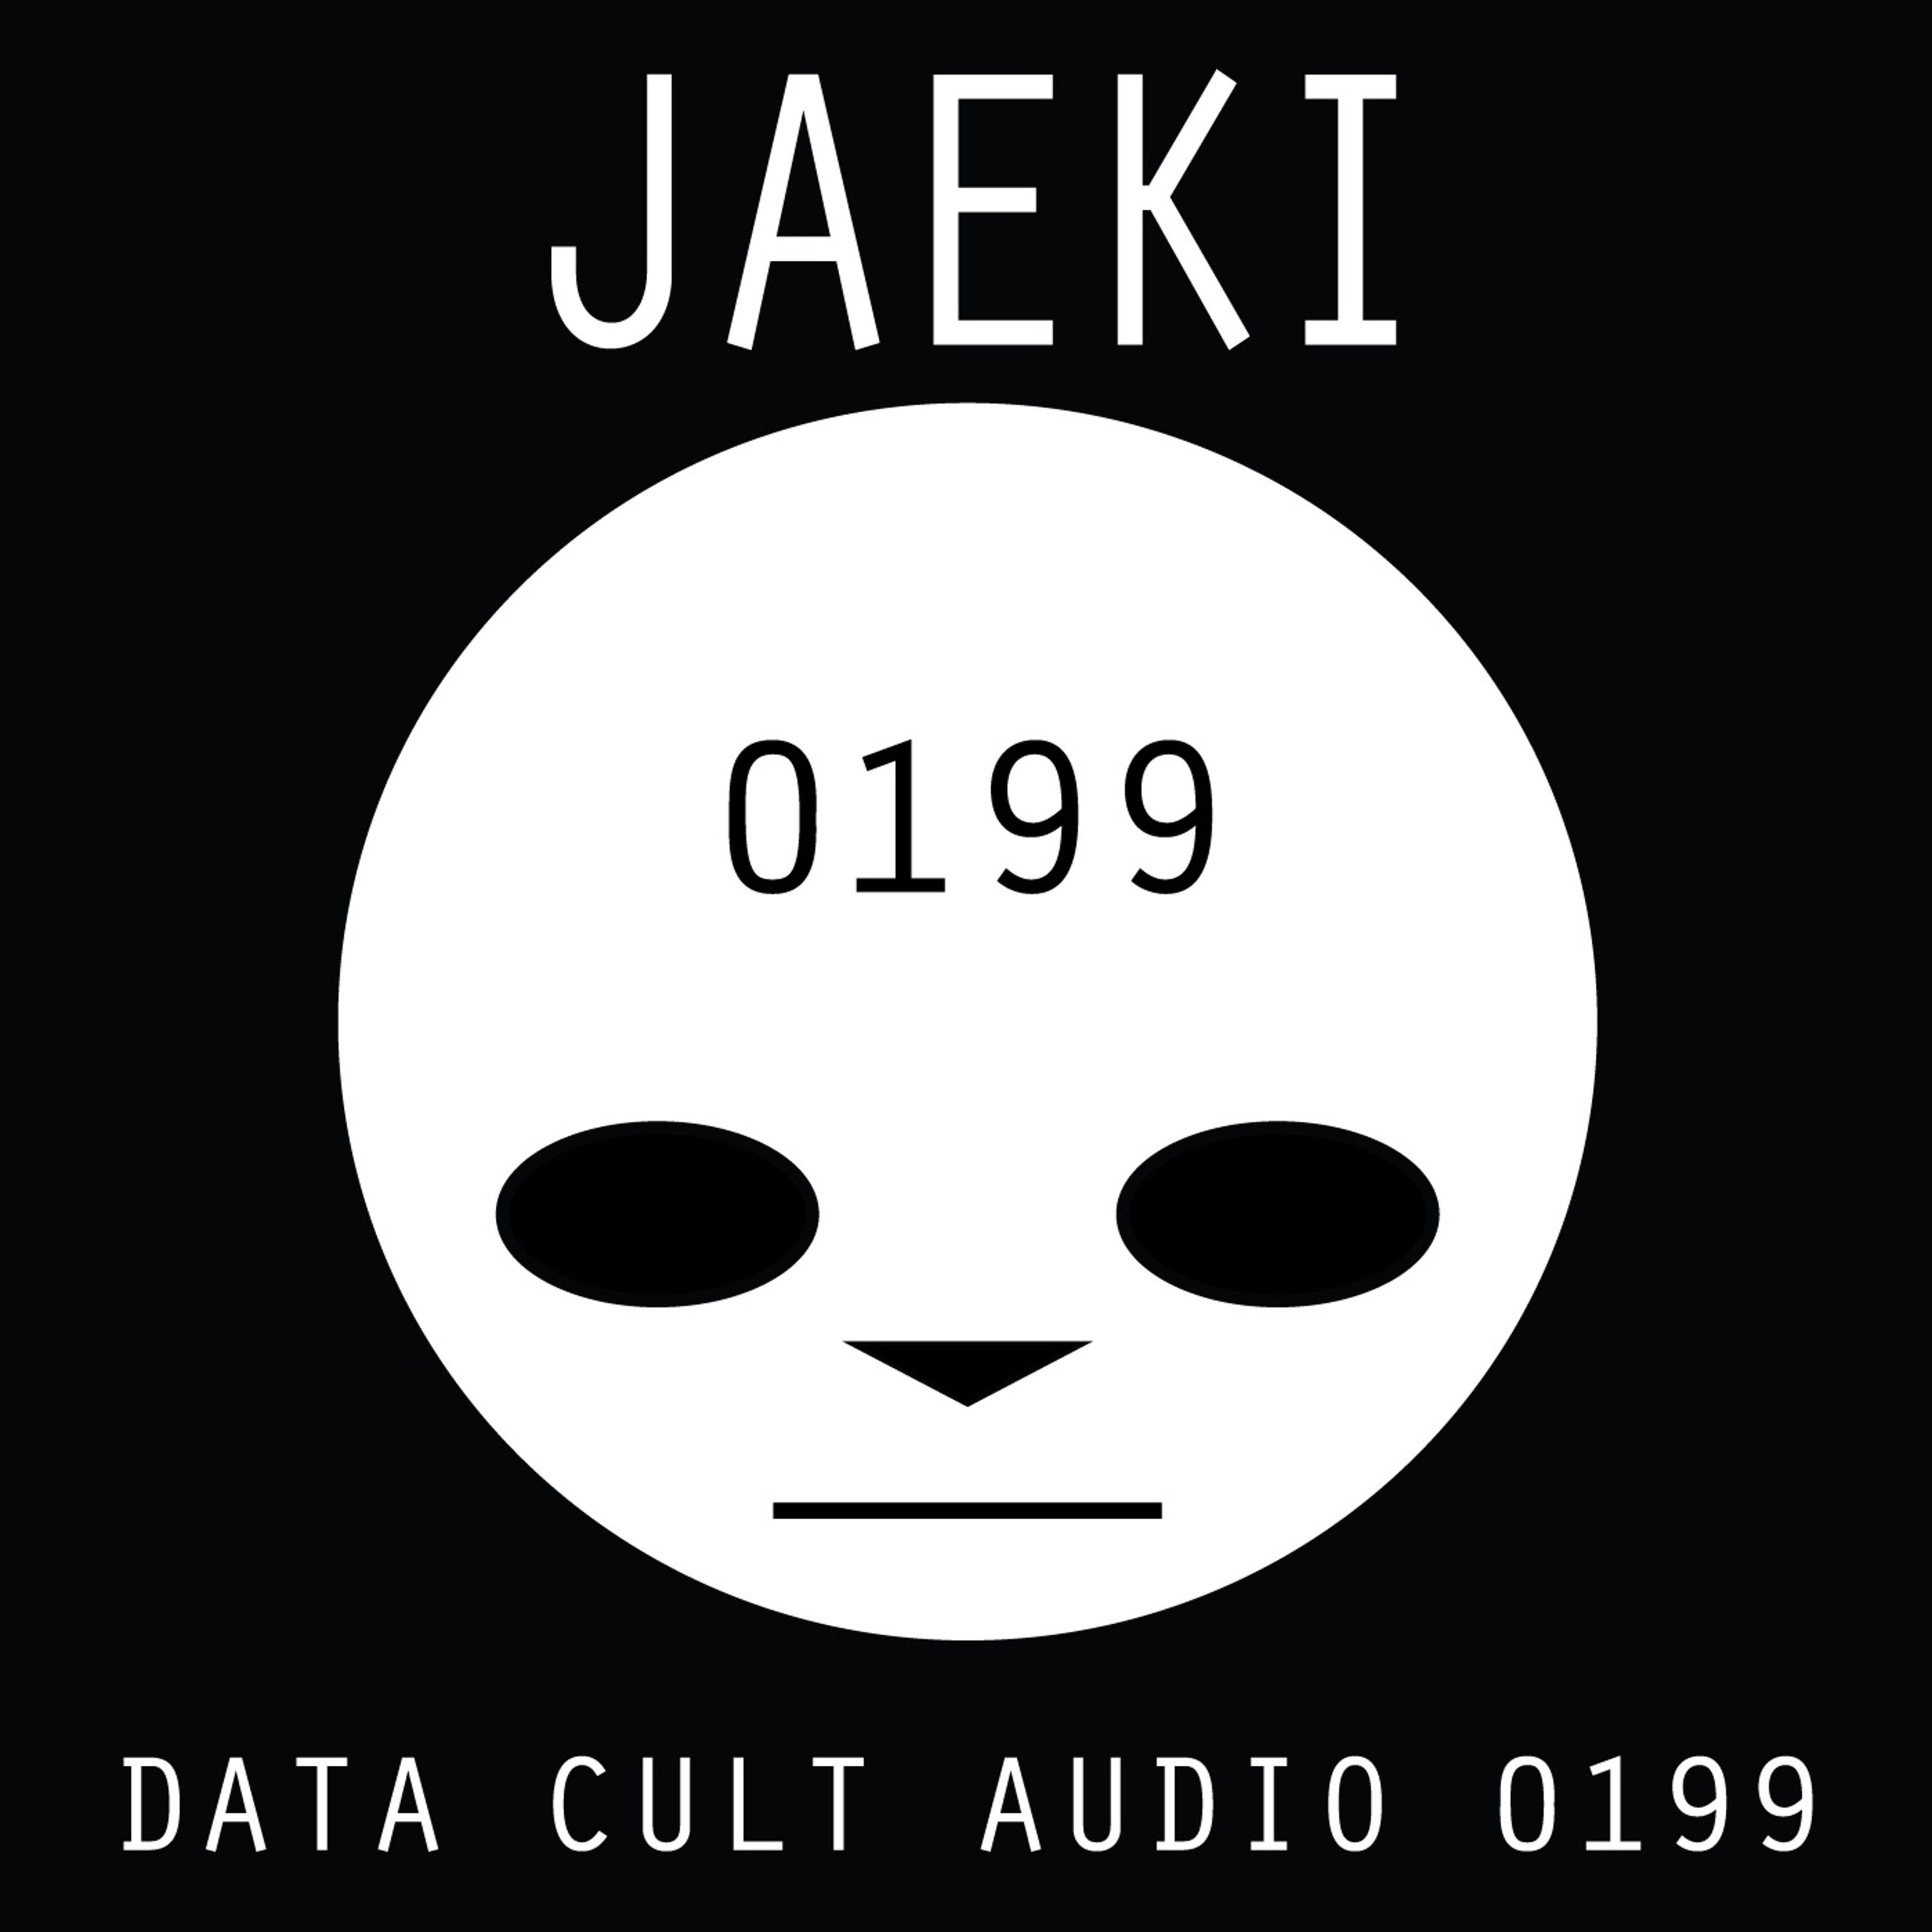 Data Cult Audio 0199 - Jaeki